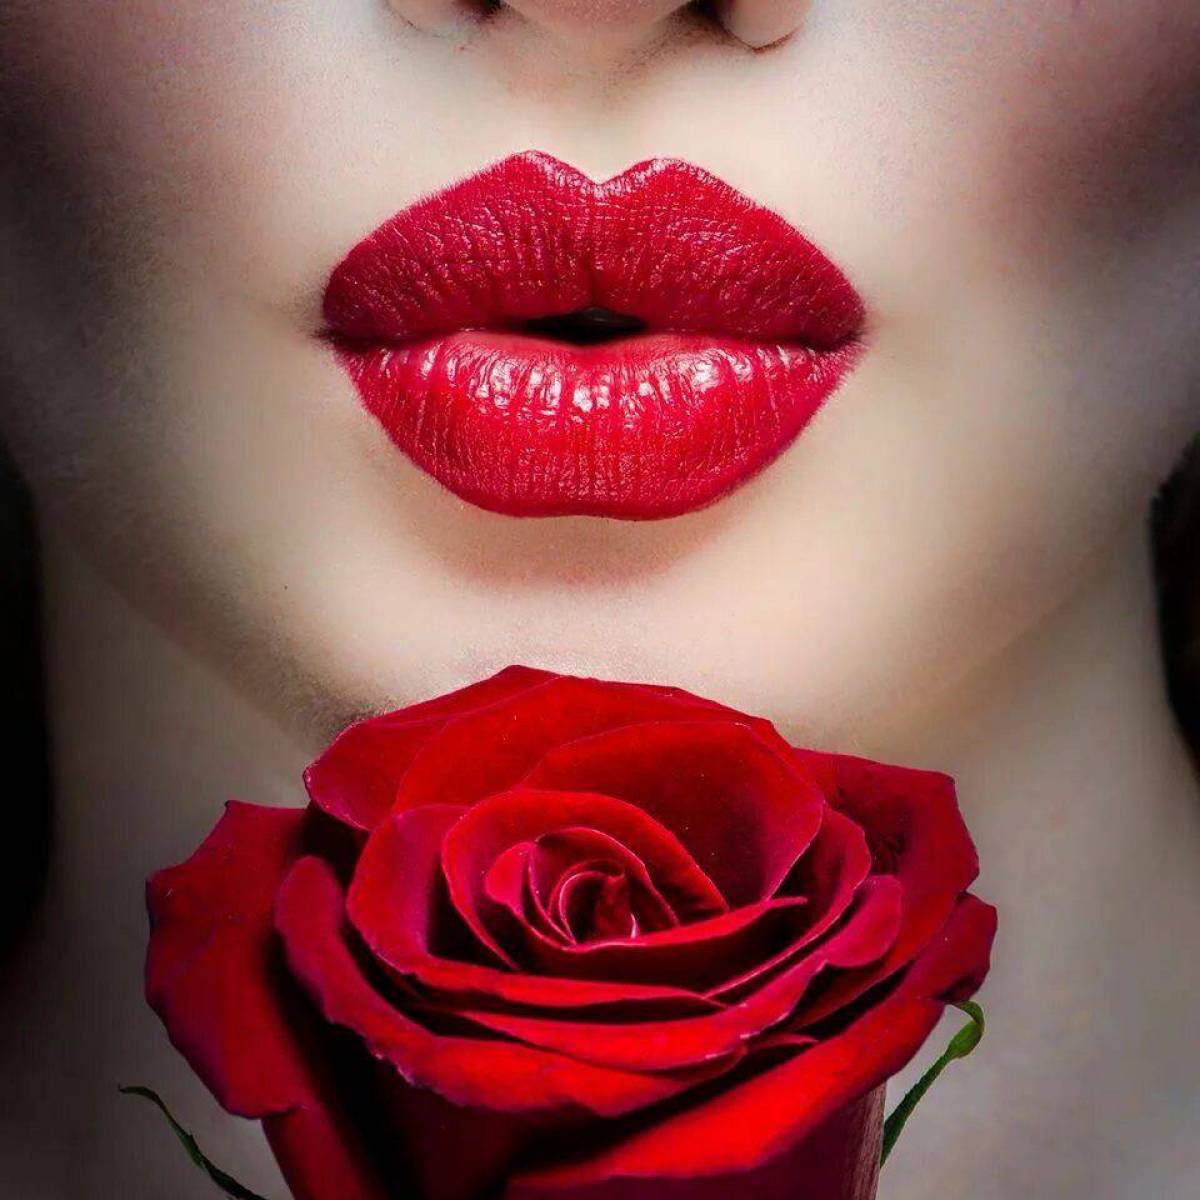 Kiss flowers. Женские губы. Красная помада. Красивые женские губы. Чувственные губы женщины.